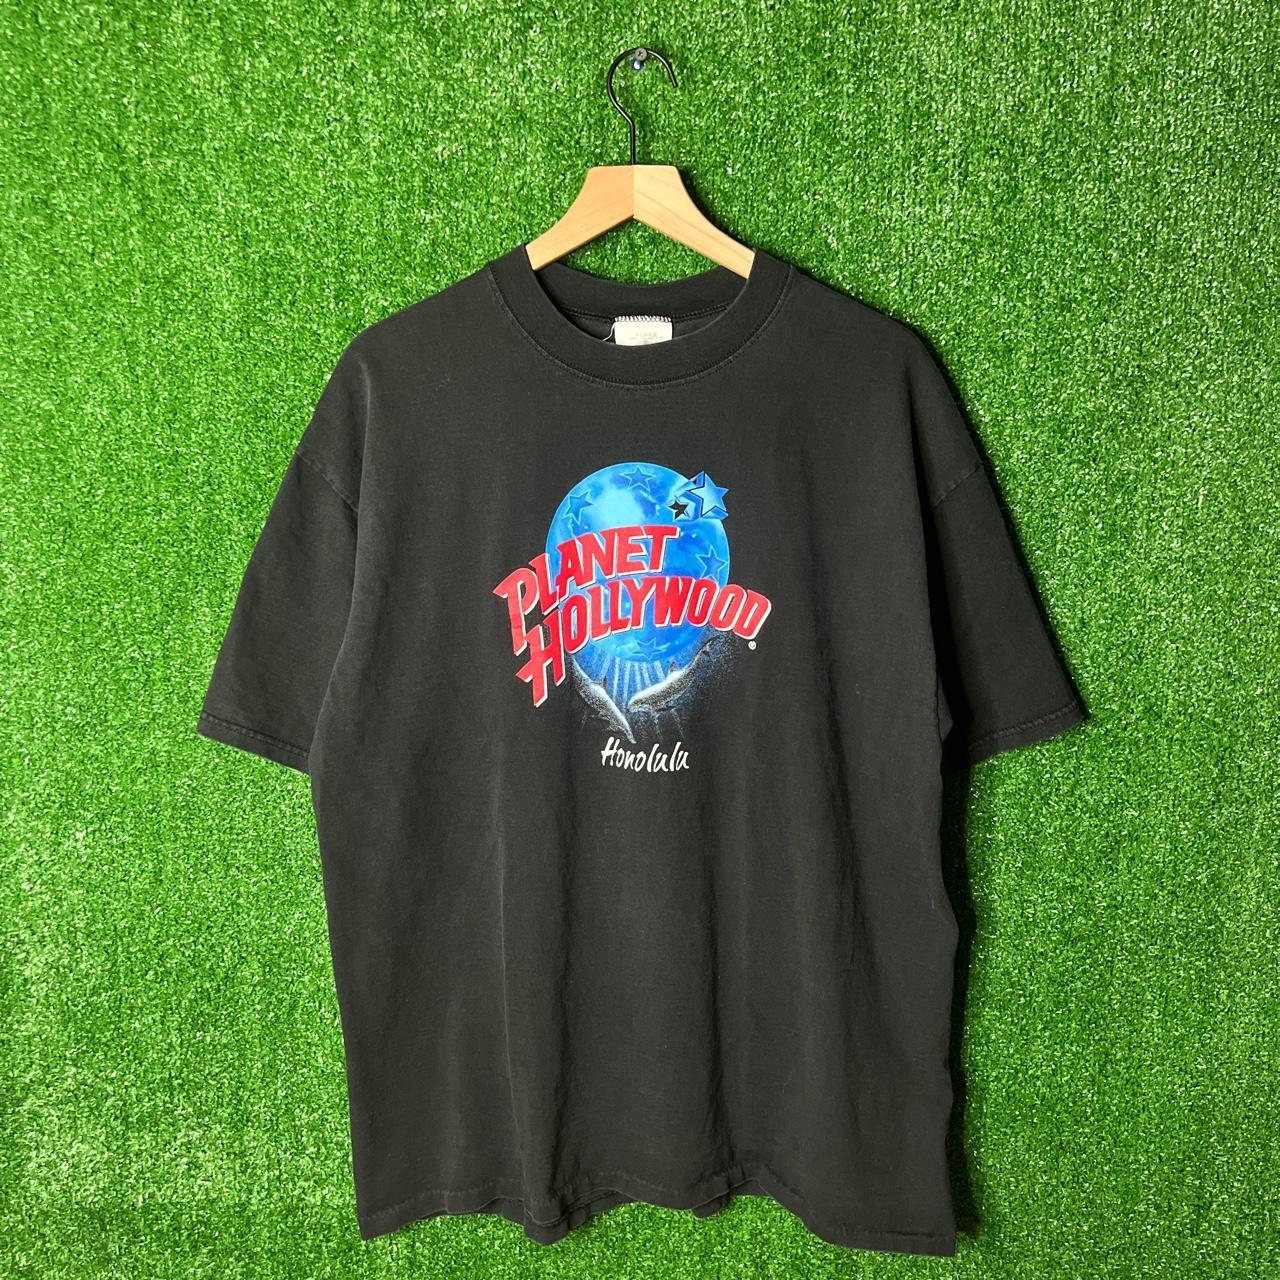 Planet Hollywood Men's Black T-shirt | Depop